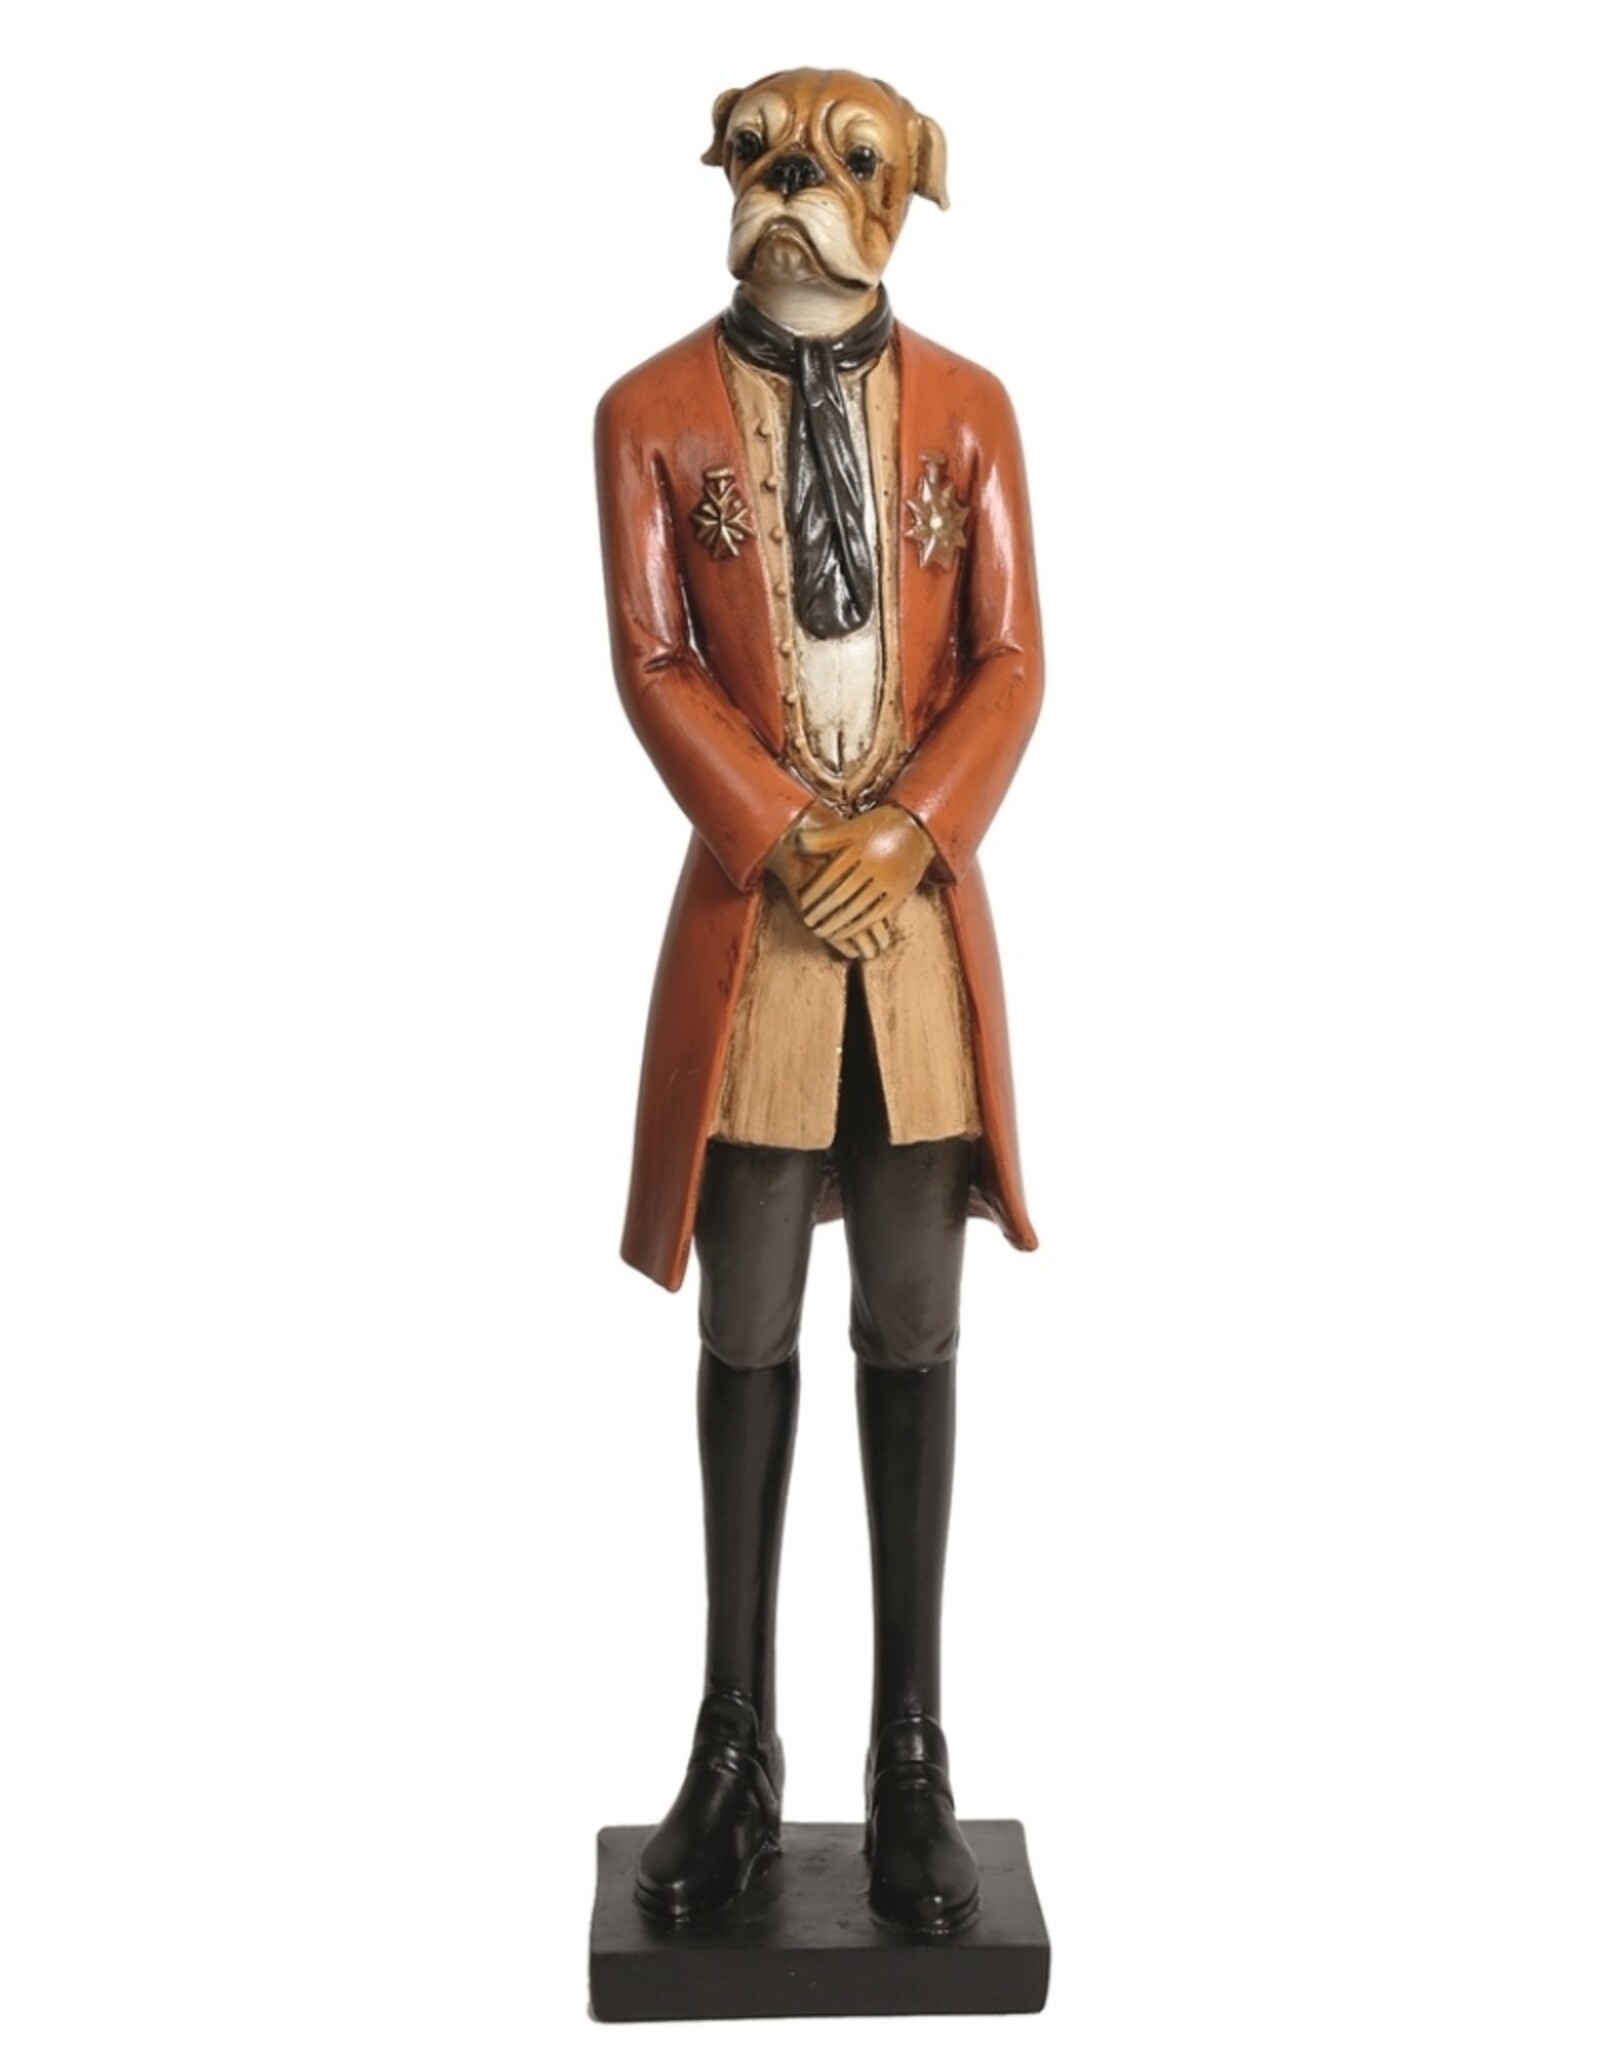 Sparks Giftware Figurines Collectables - Nobleman Boxer in Orange Jacket Statue 43cm